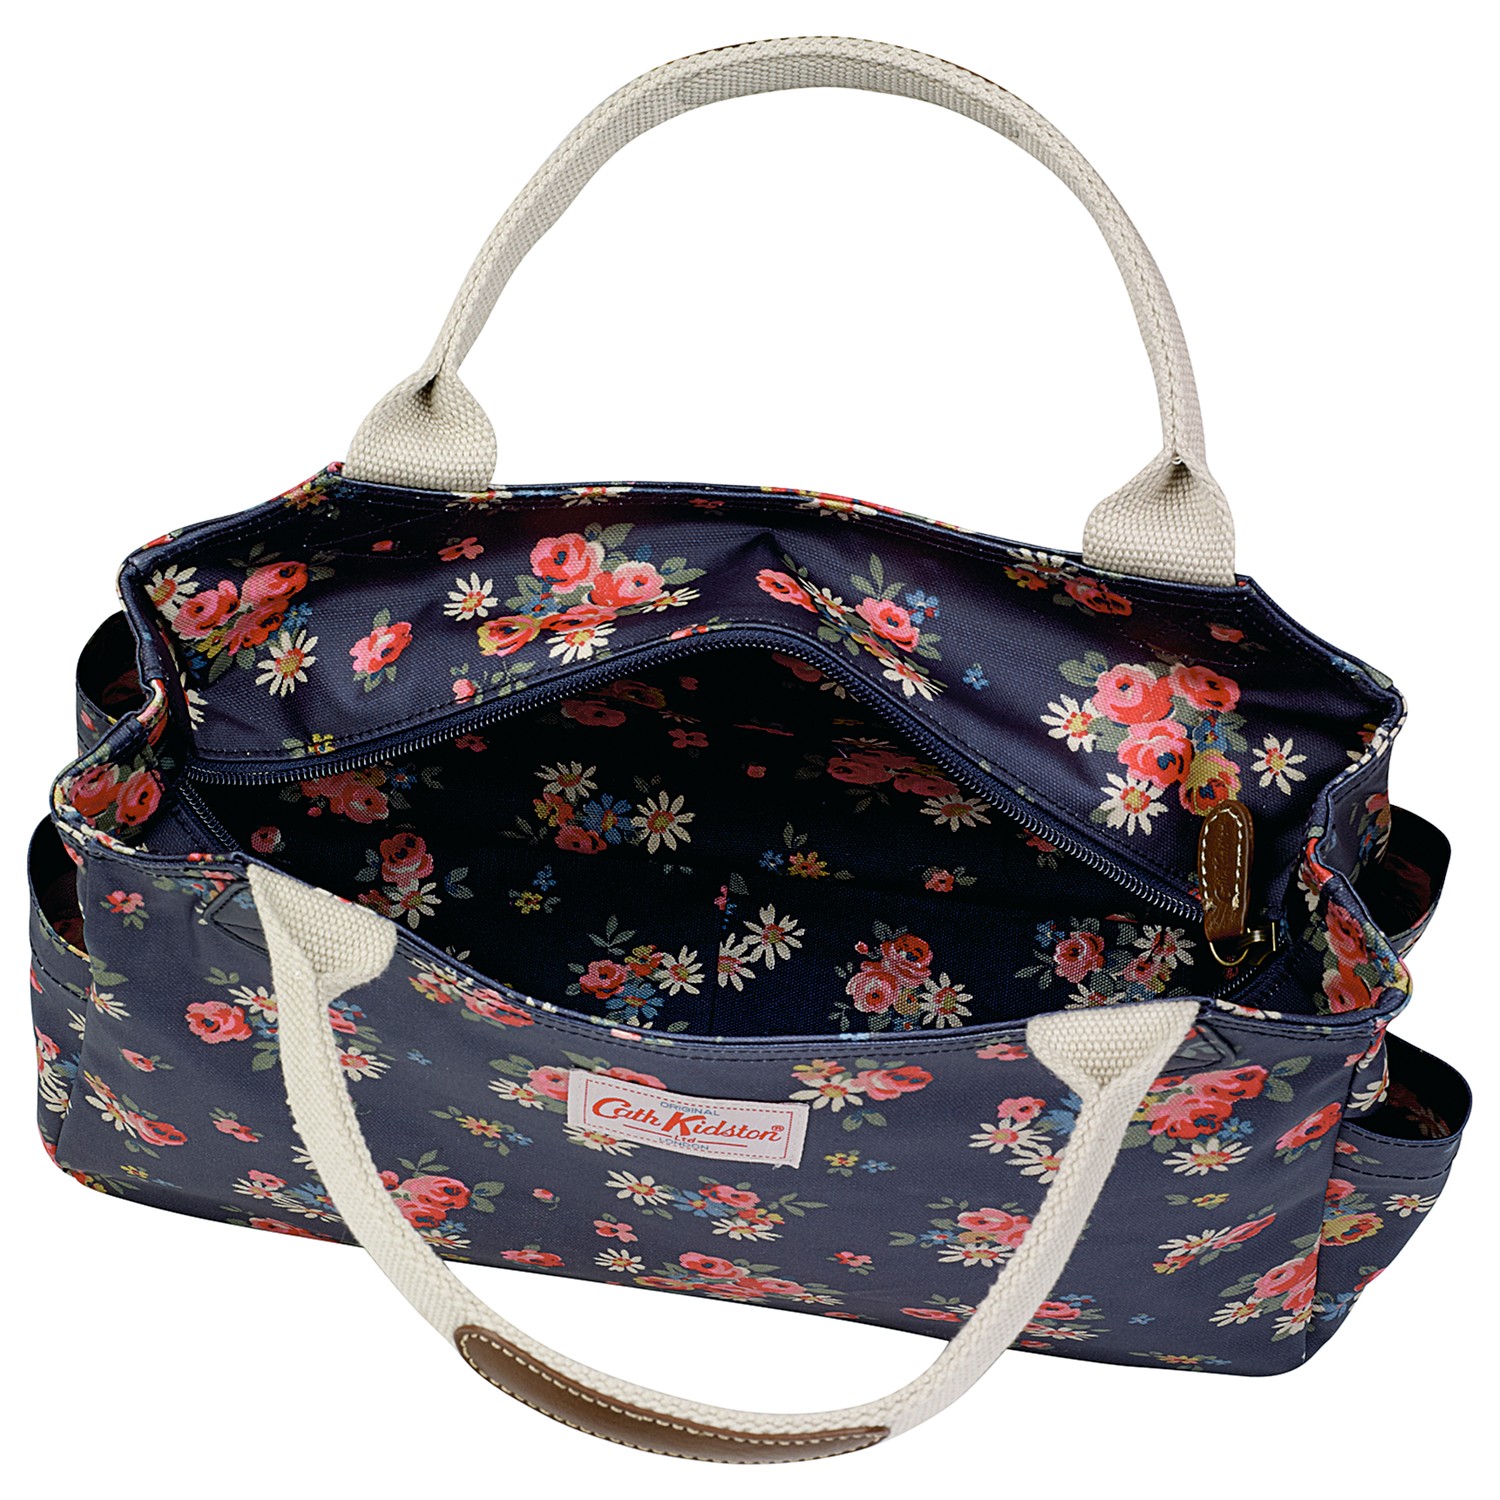 cath kidston navy floral bag